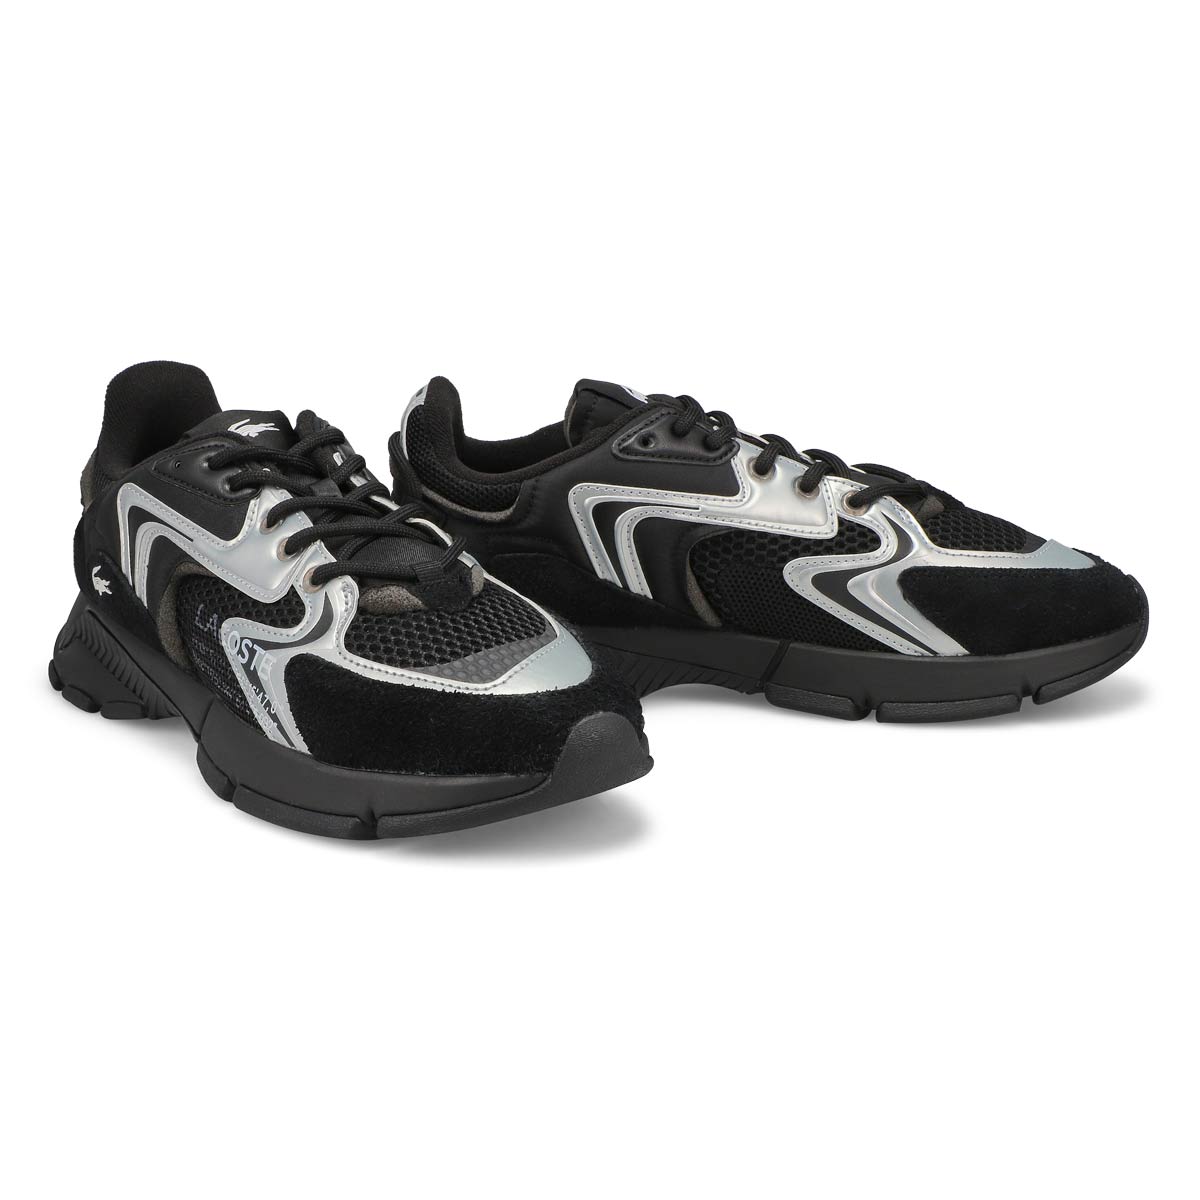 Mens L003 Neo Contrasted Sneaker - Black/White